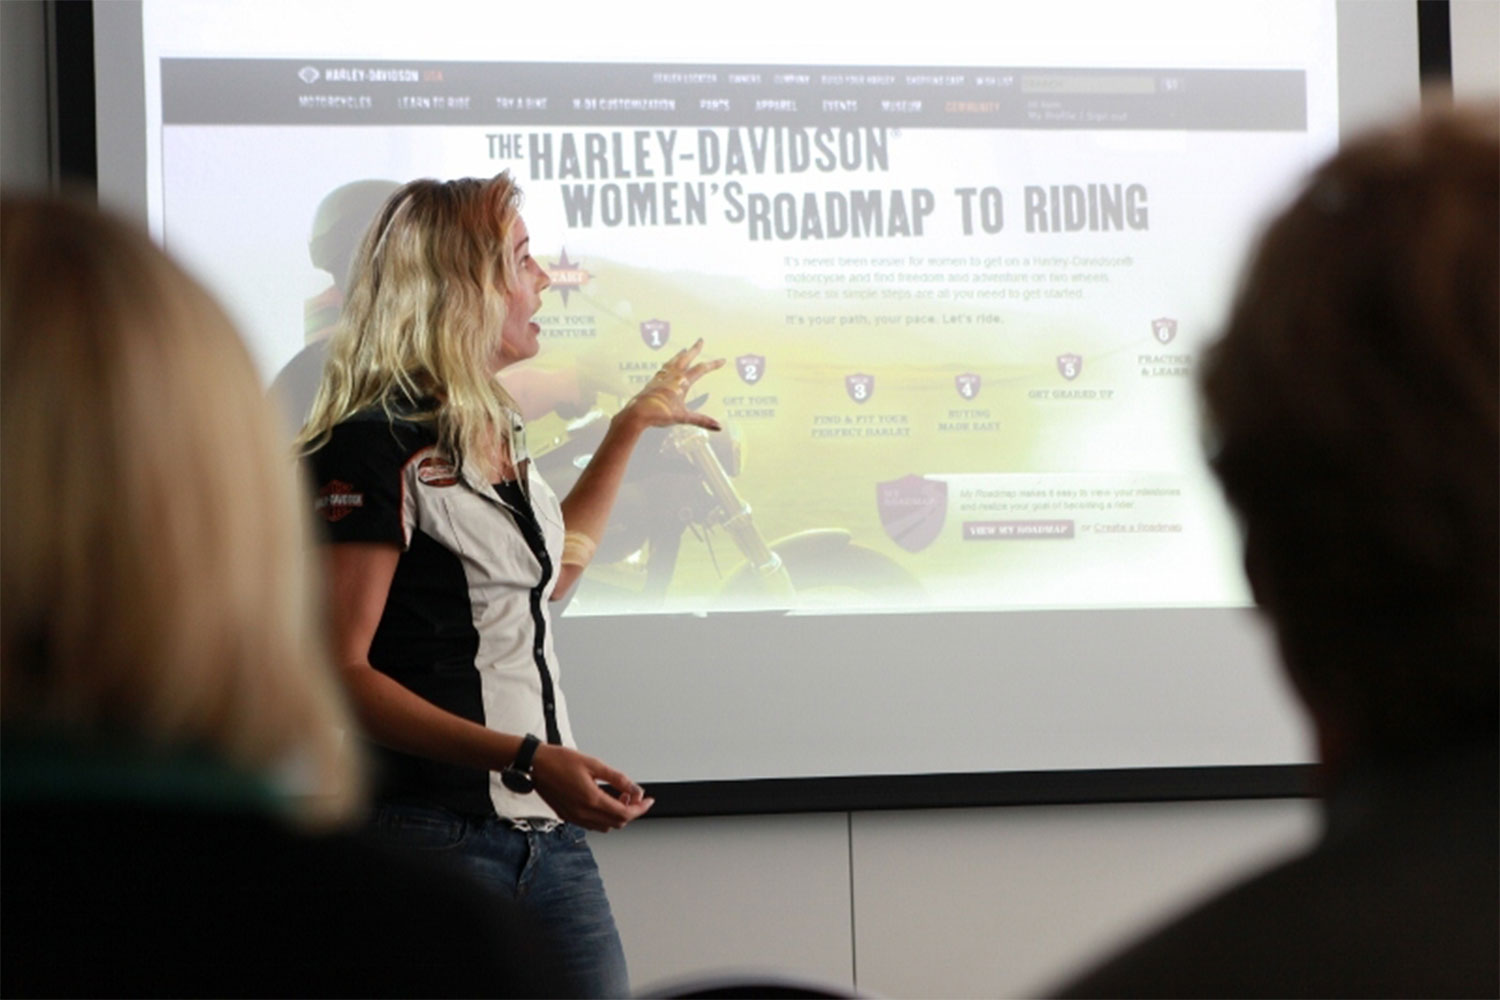 Harley-Davidson female focused events